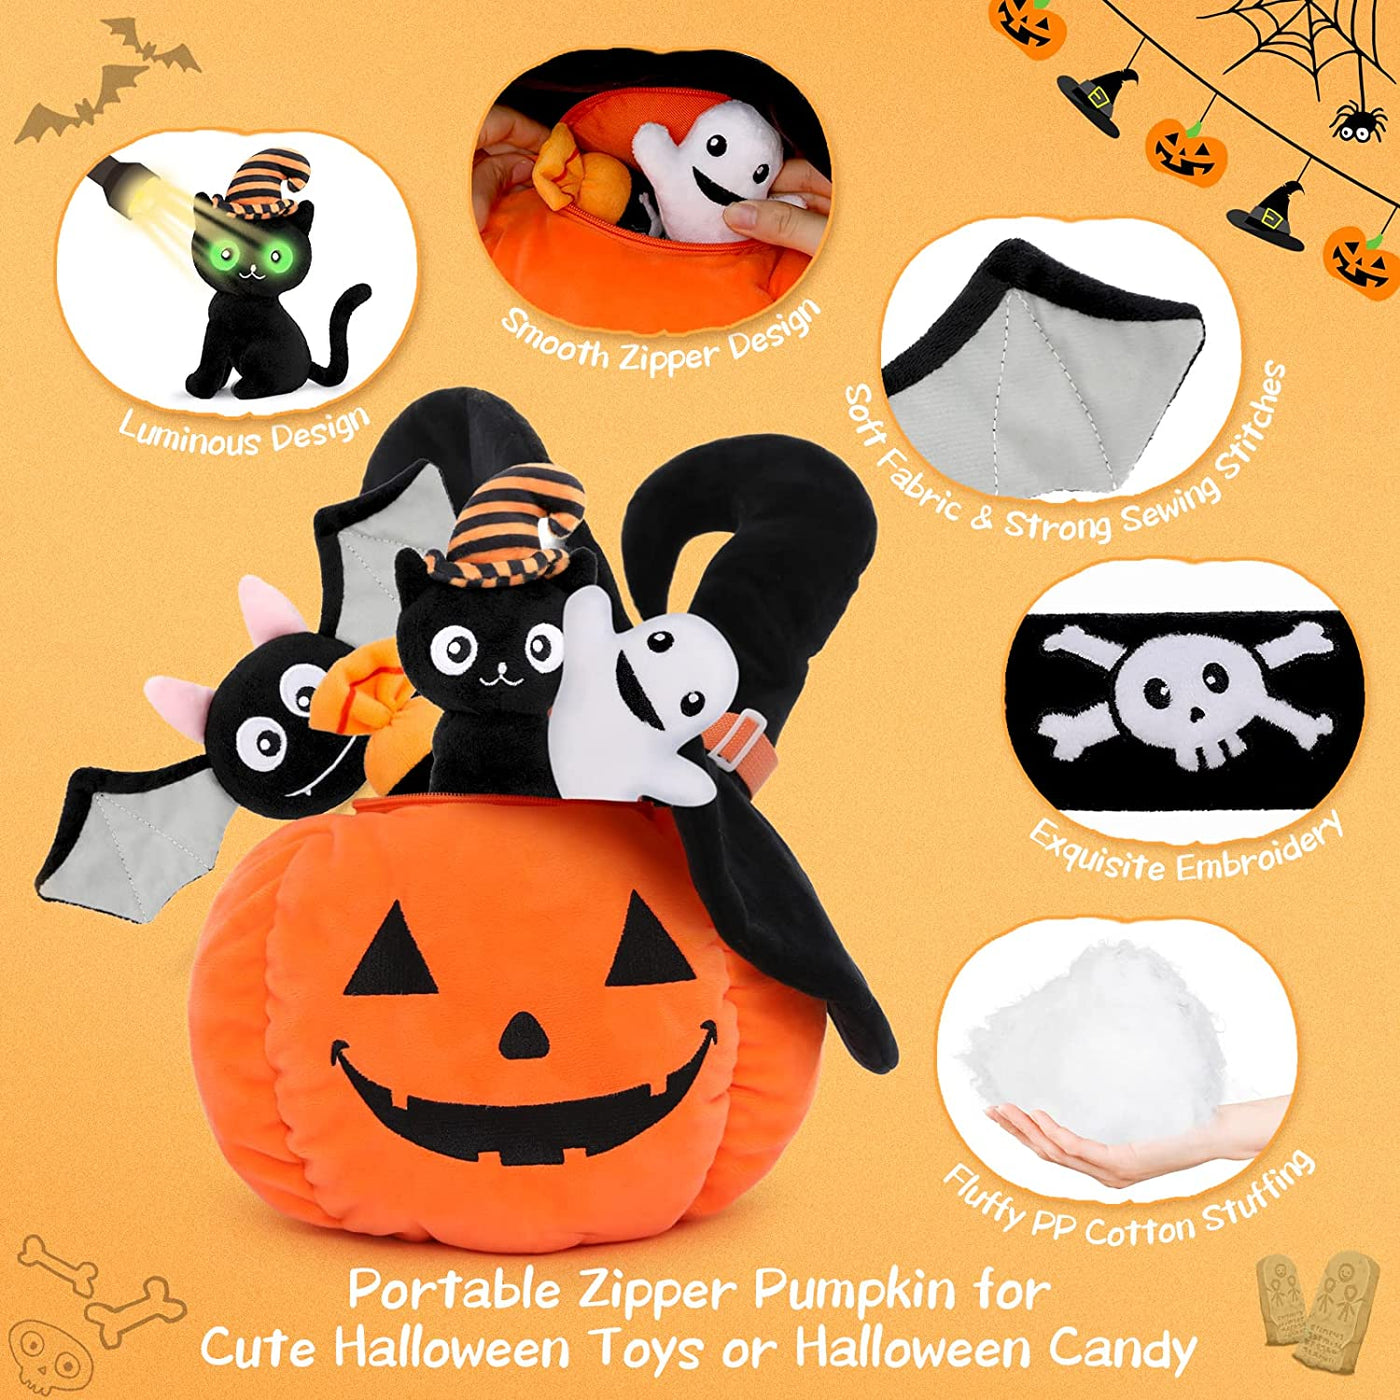 Halloween Pumpkin Stuffed Toy Set, 14 Inches - MorisMos Stuffed Animals